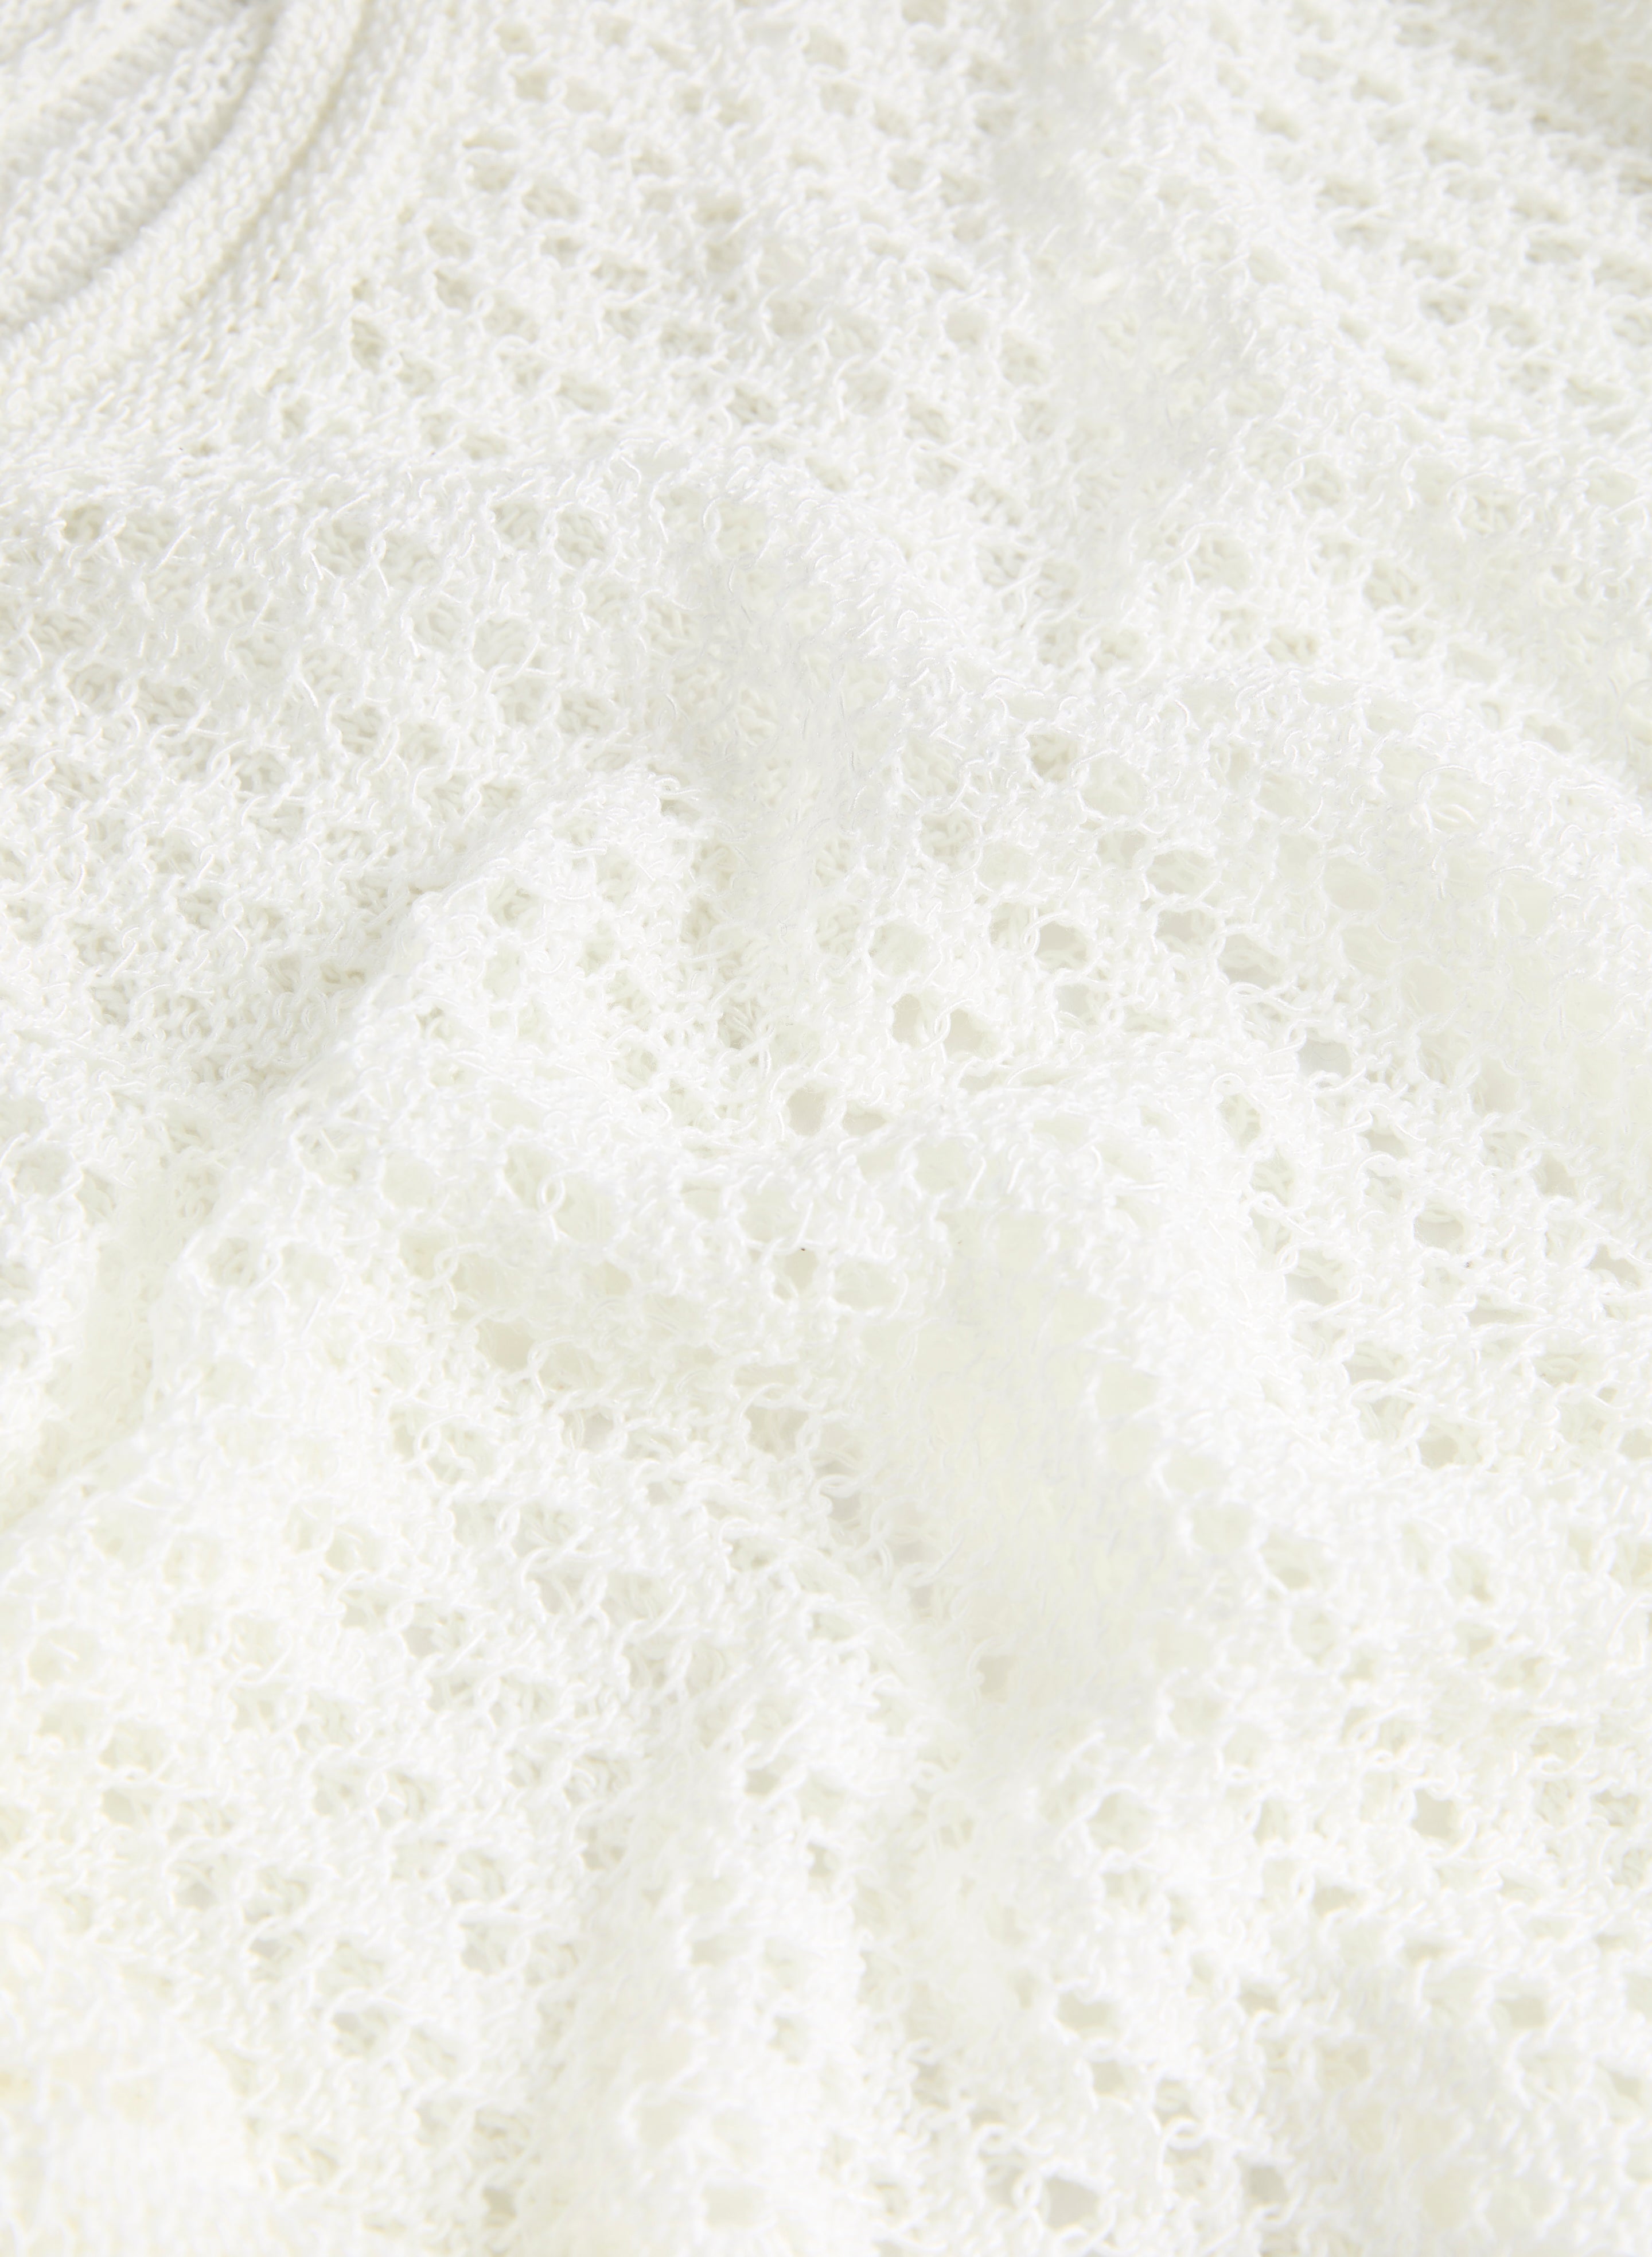 Ivory, Cotton Linen Feminine Stitch Sweater